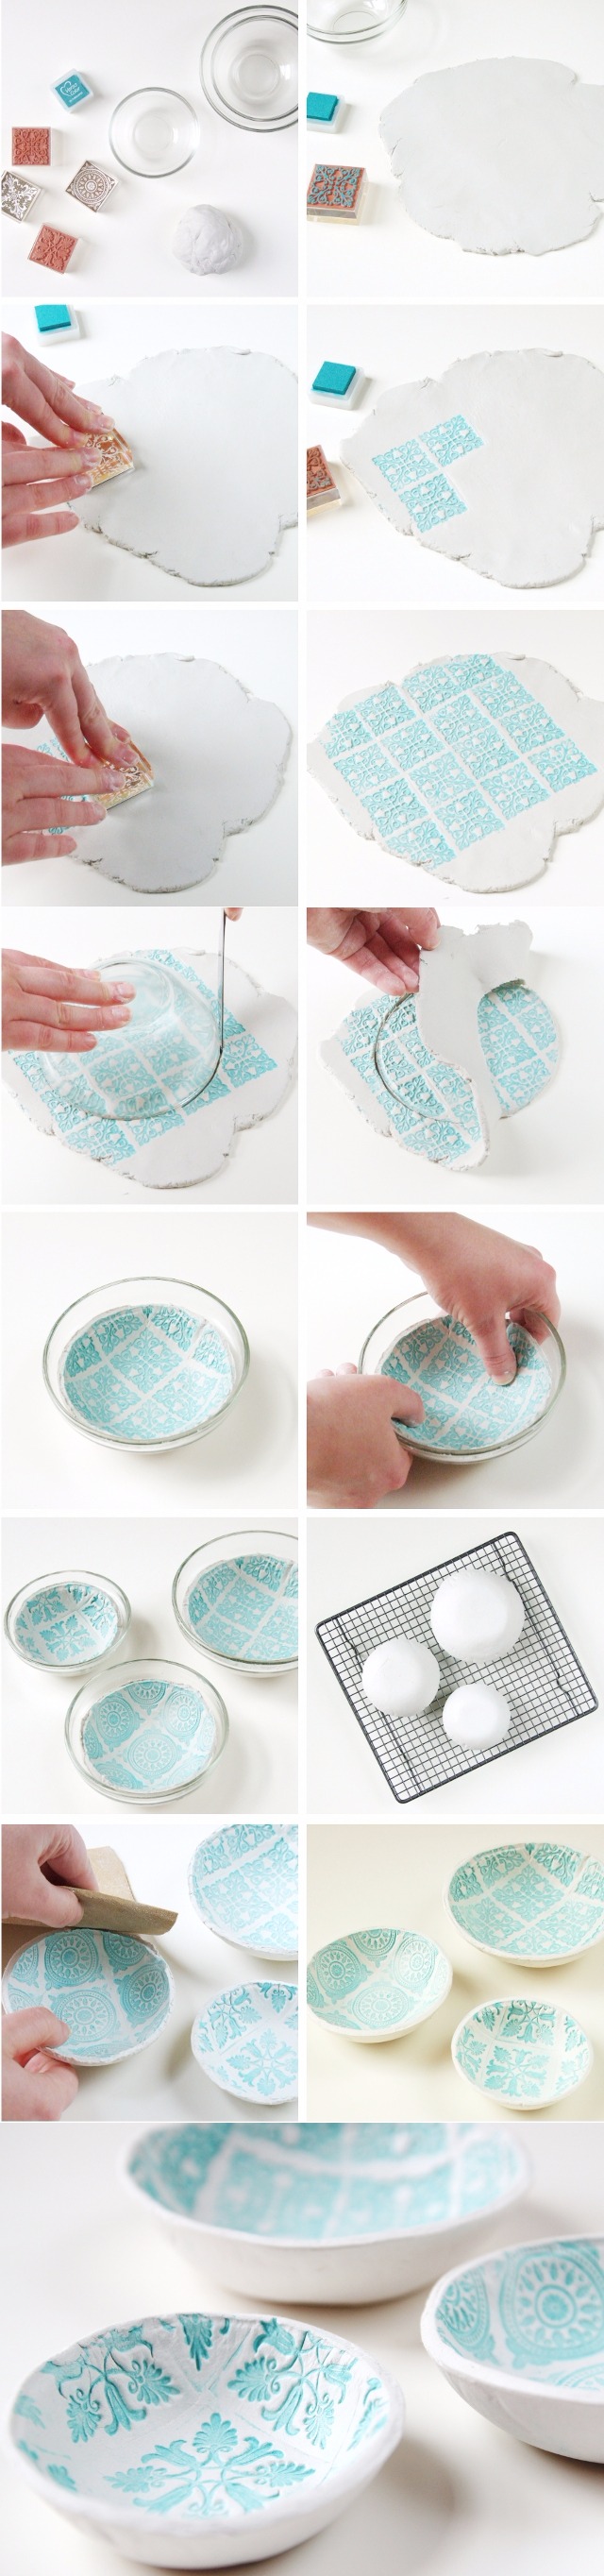 DIY Stamped Clay Bowls